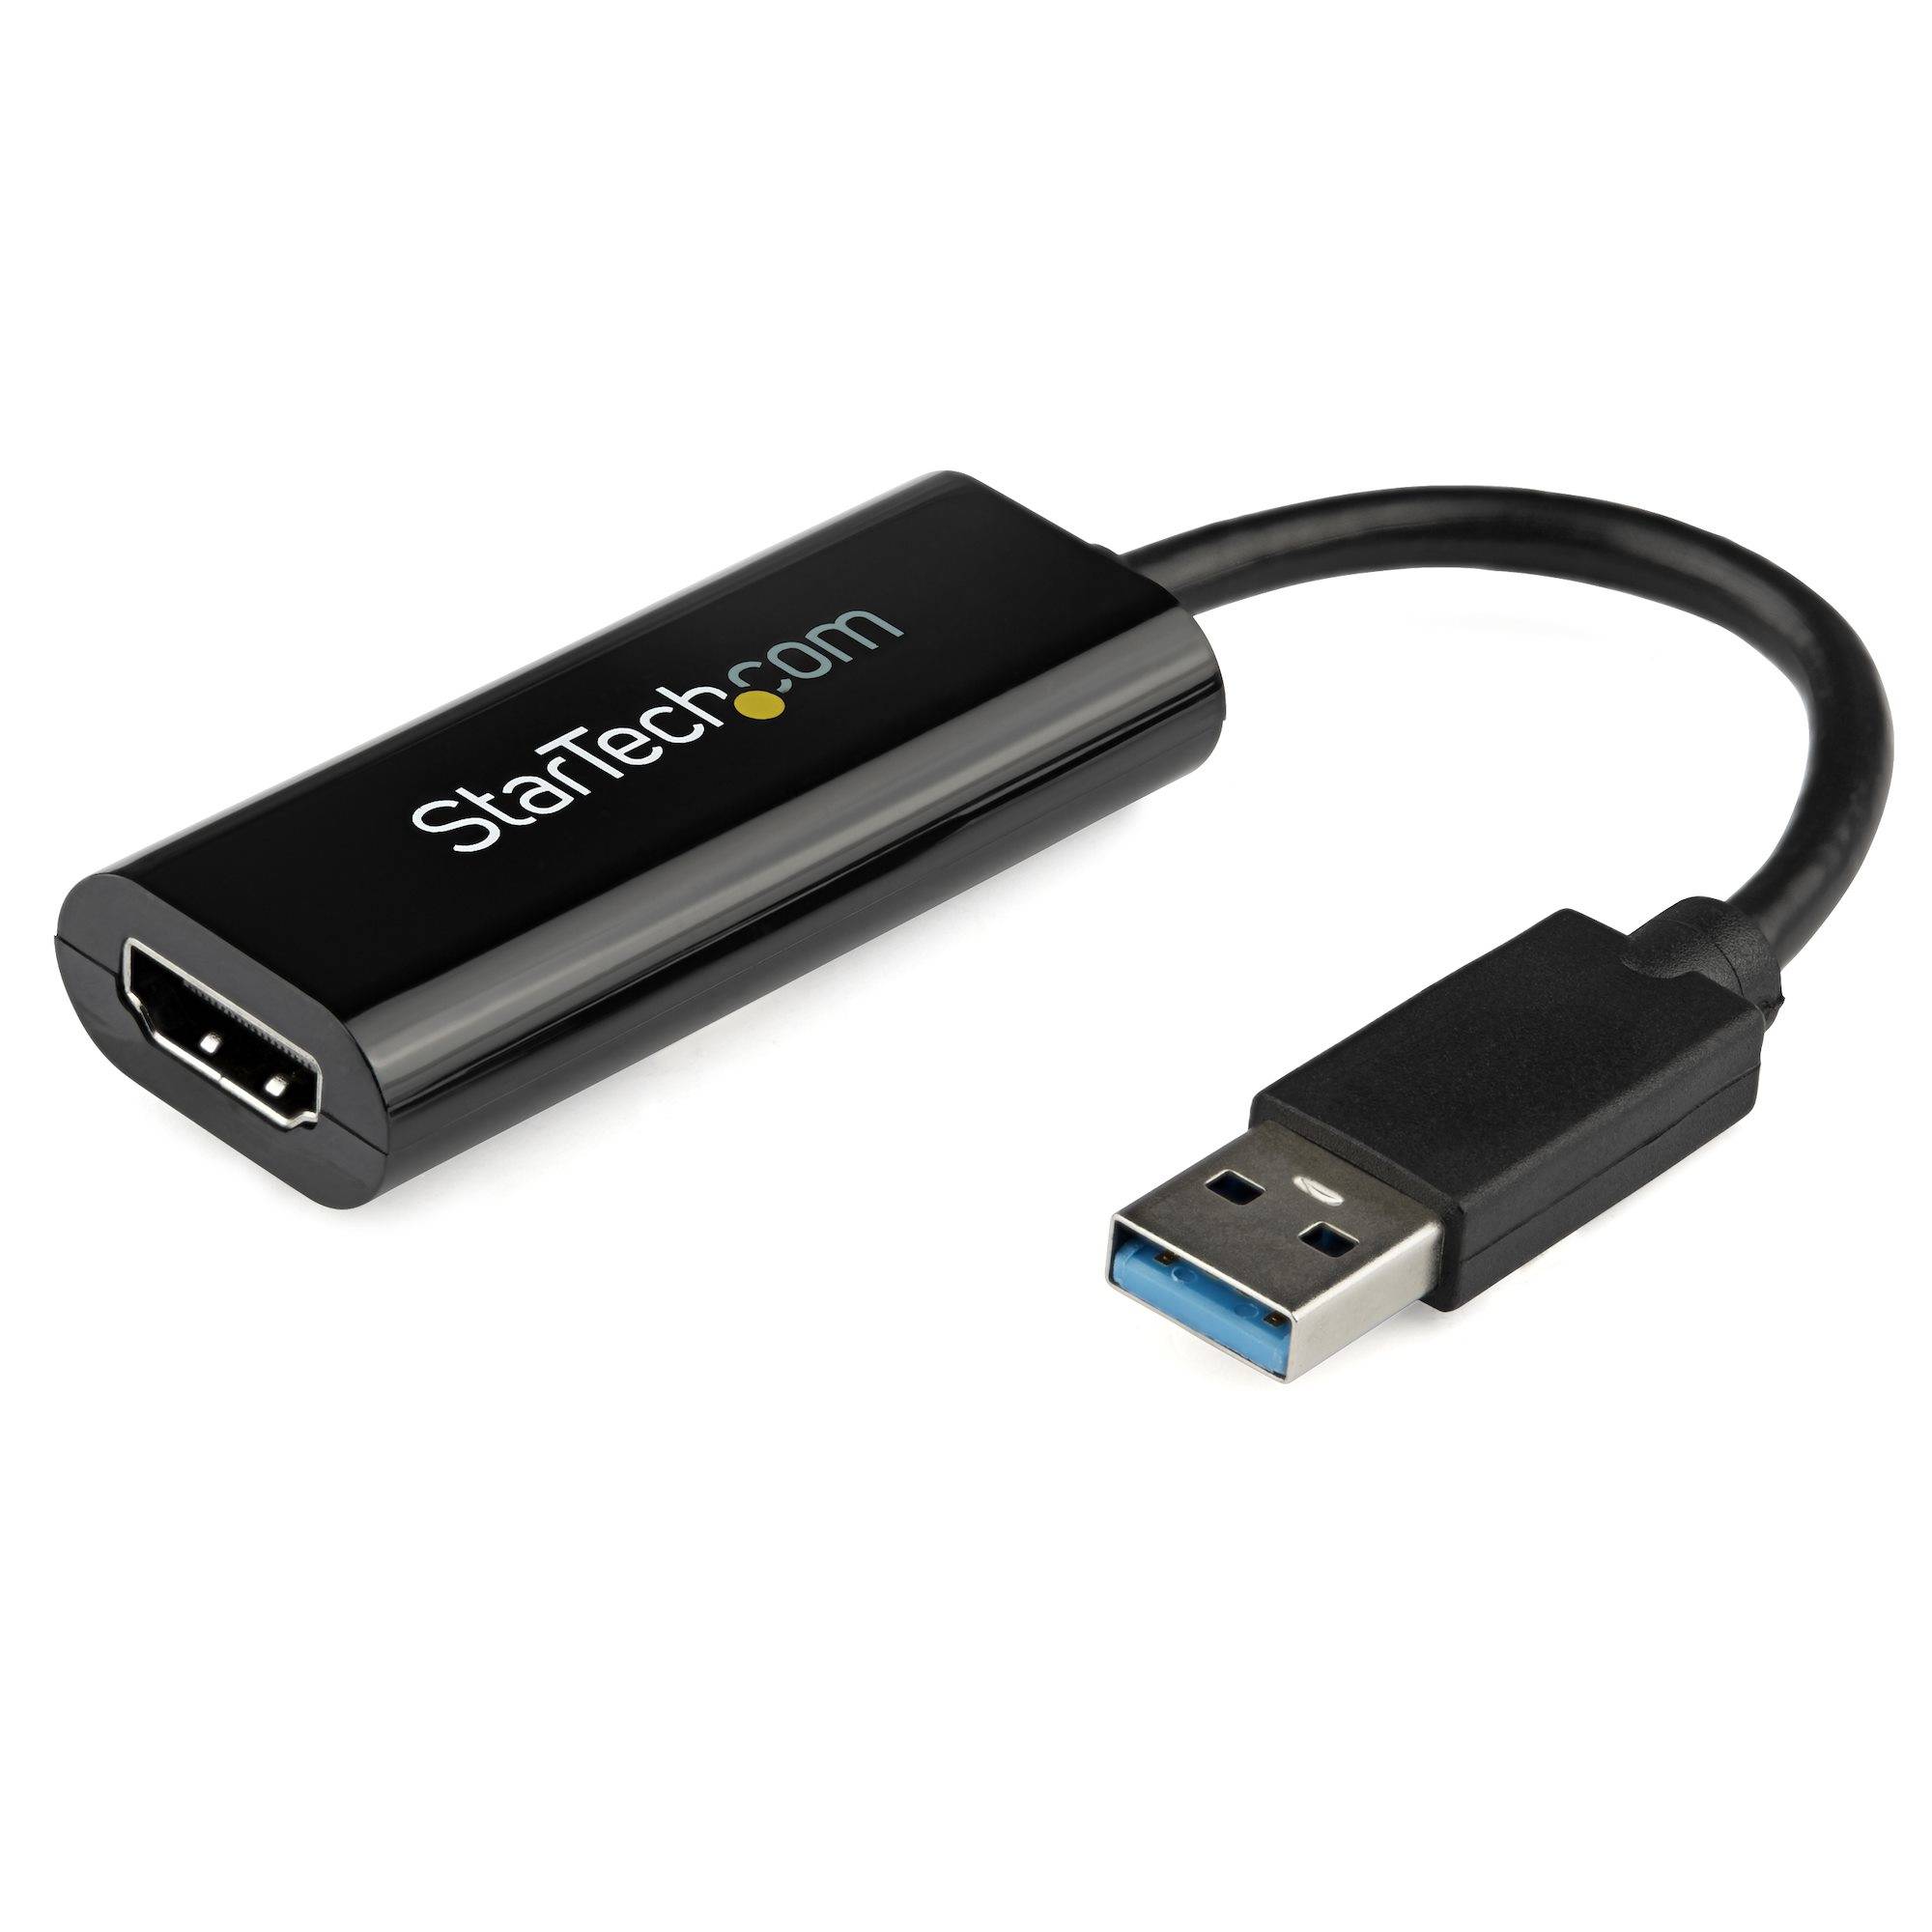 Rca Informatique - Image du produit : SLIM USB 3.0 TO HDMI EXTERNAL VIDEO CARD ADAPTER 1920X1200